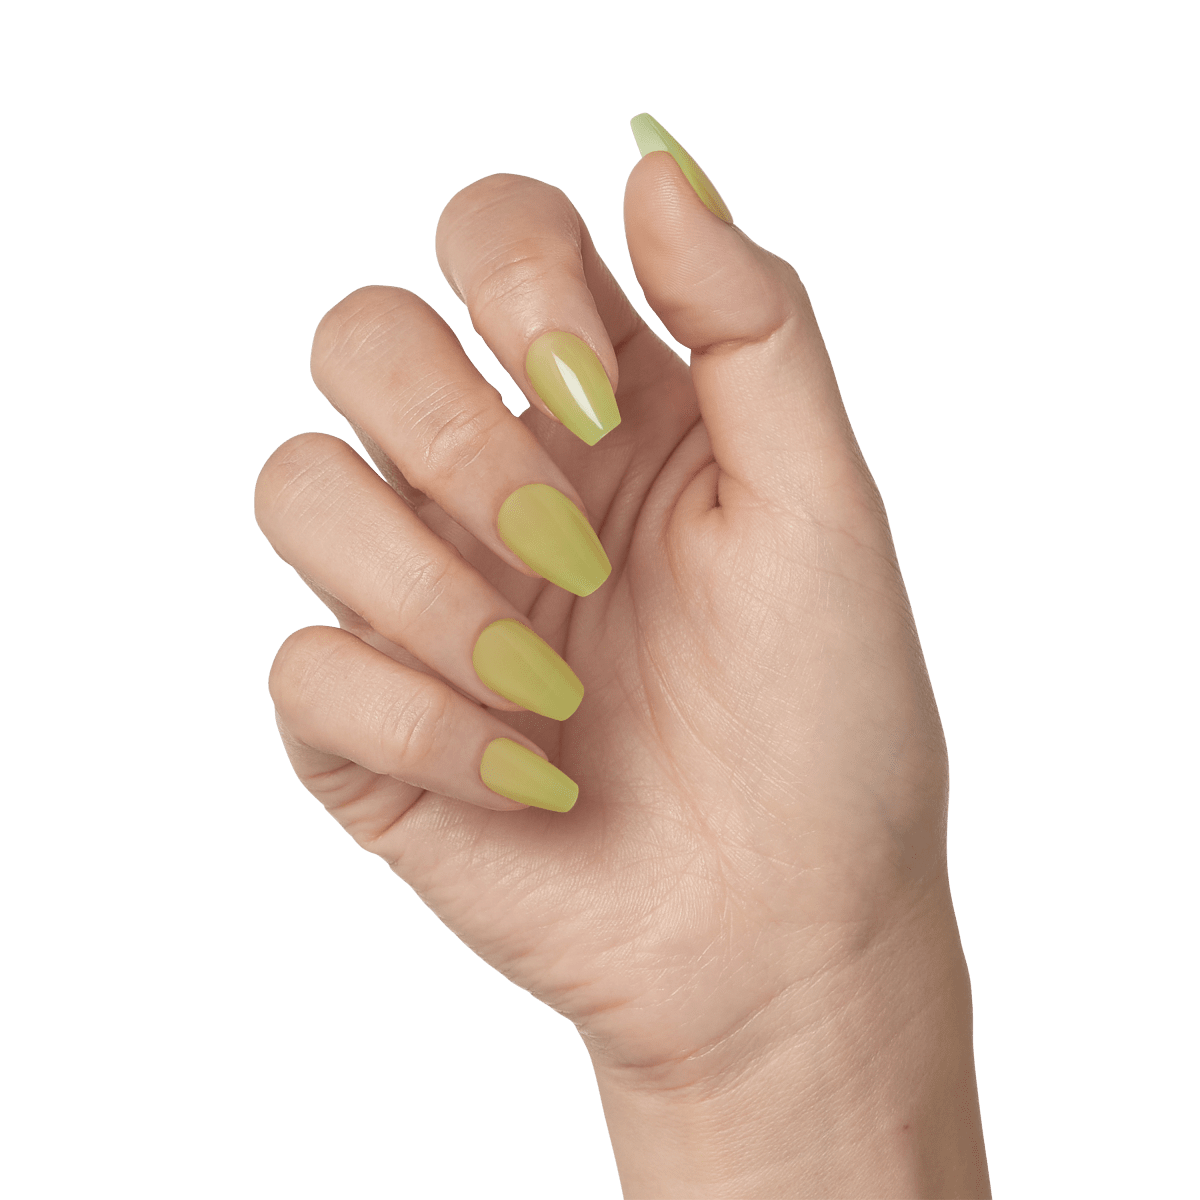 Diamond nails salon & spa - New colors alert 🚨 | Facebook